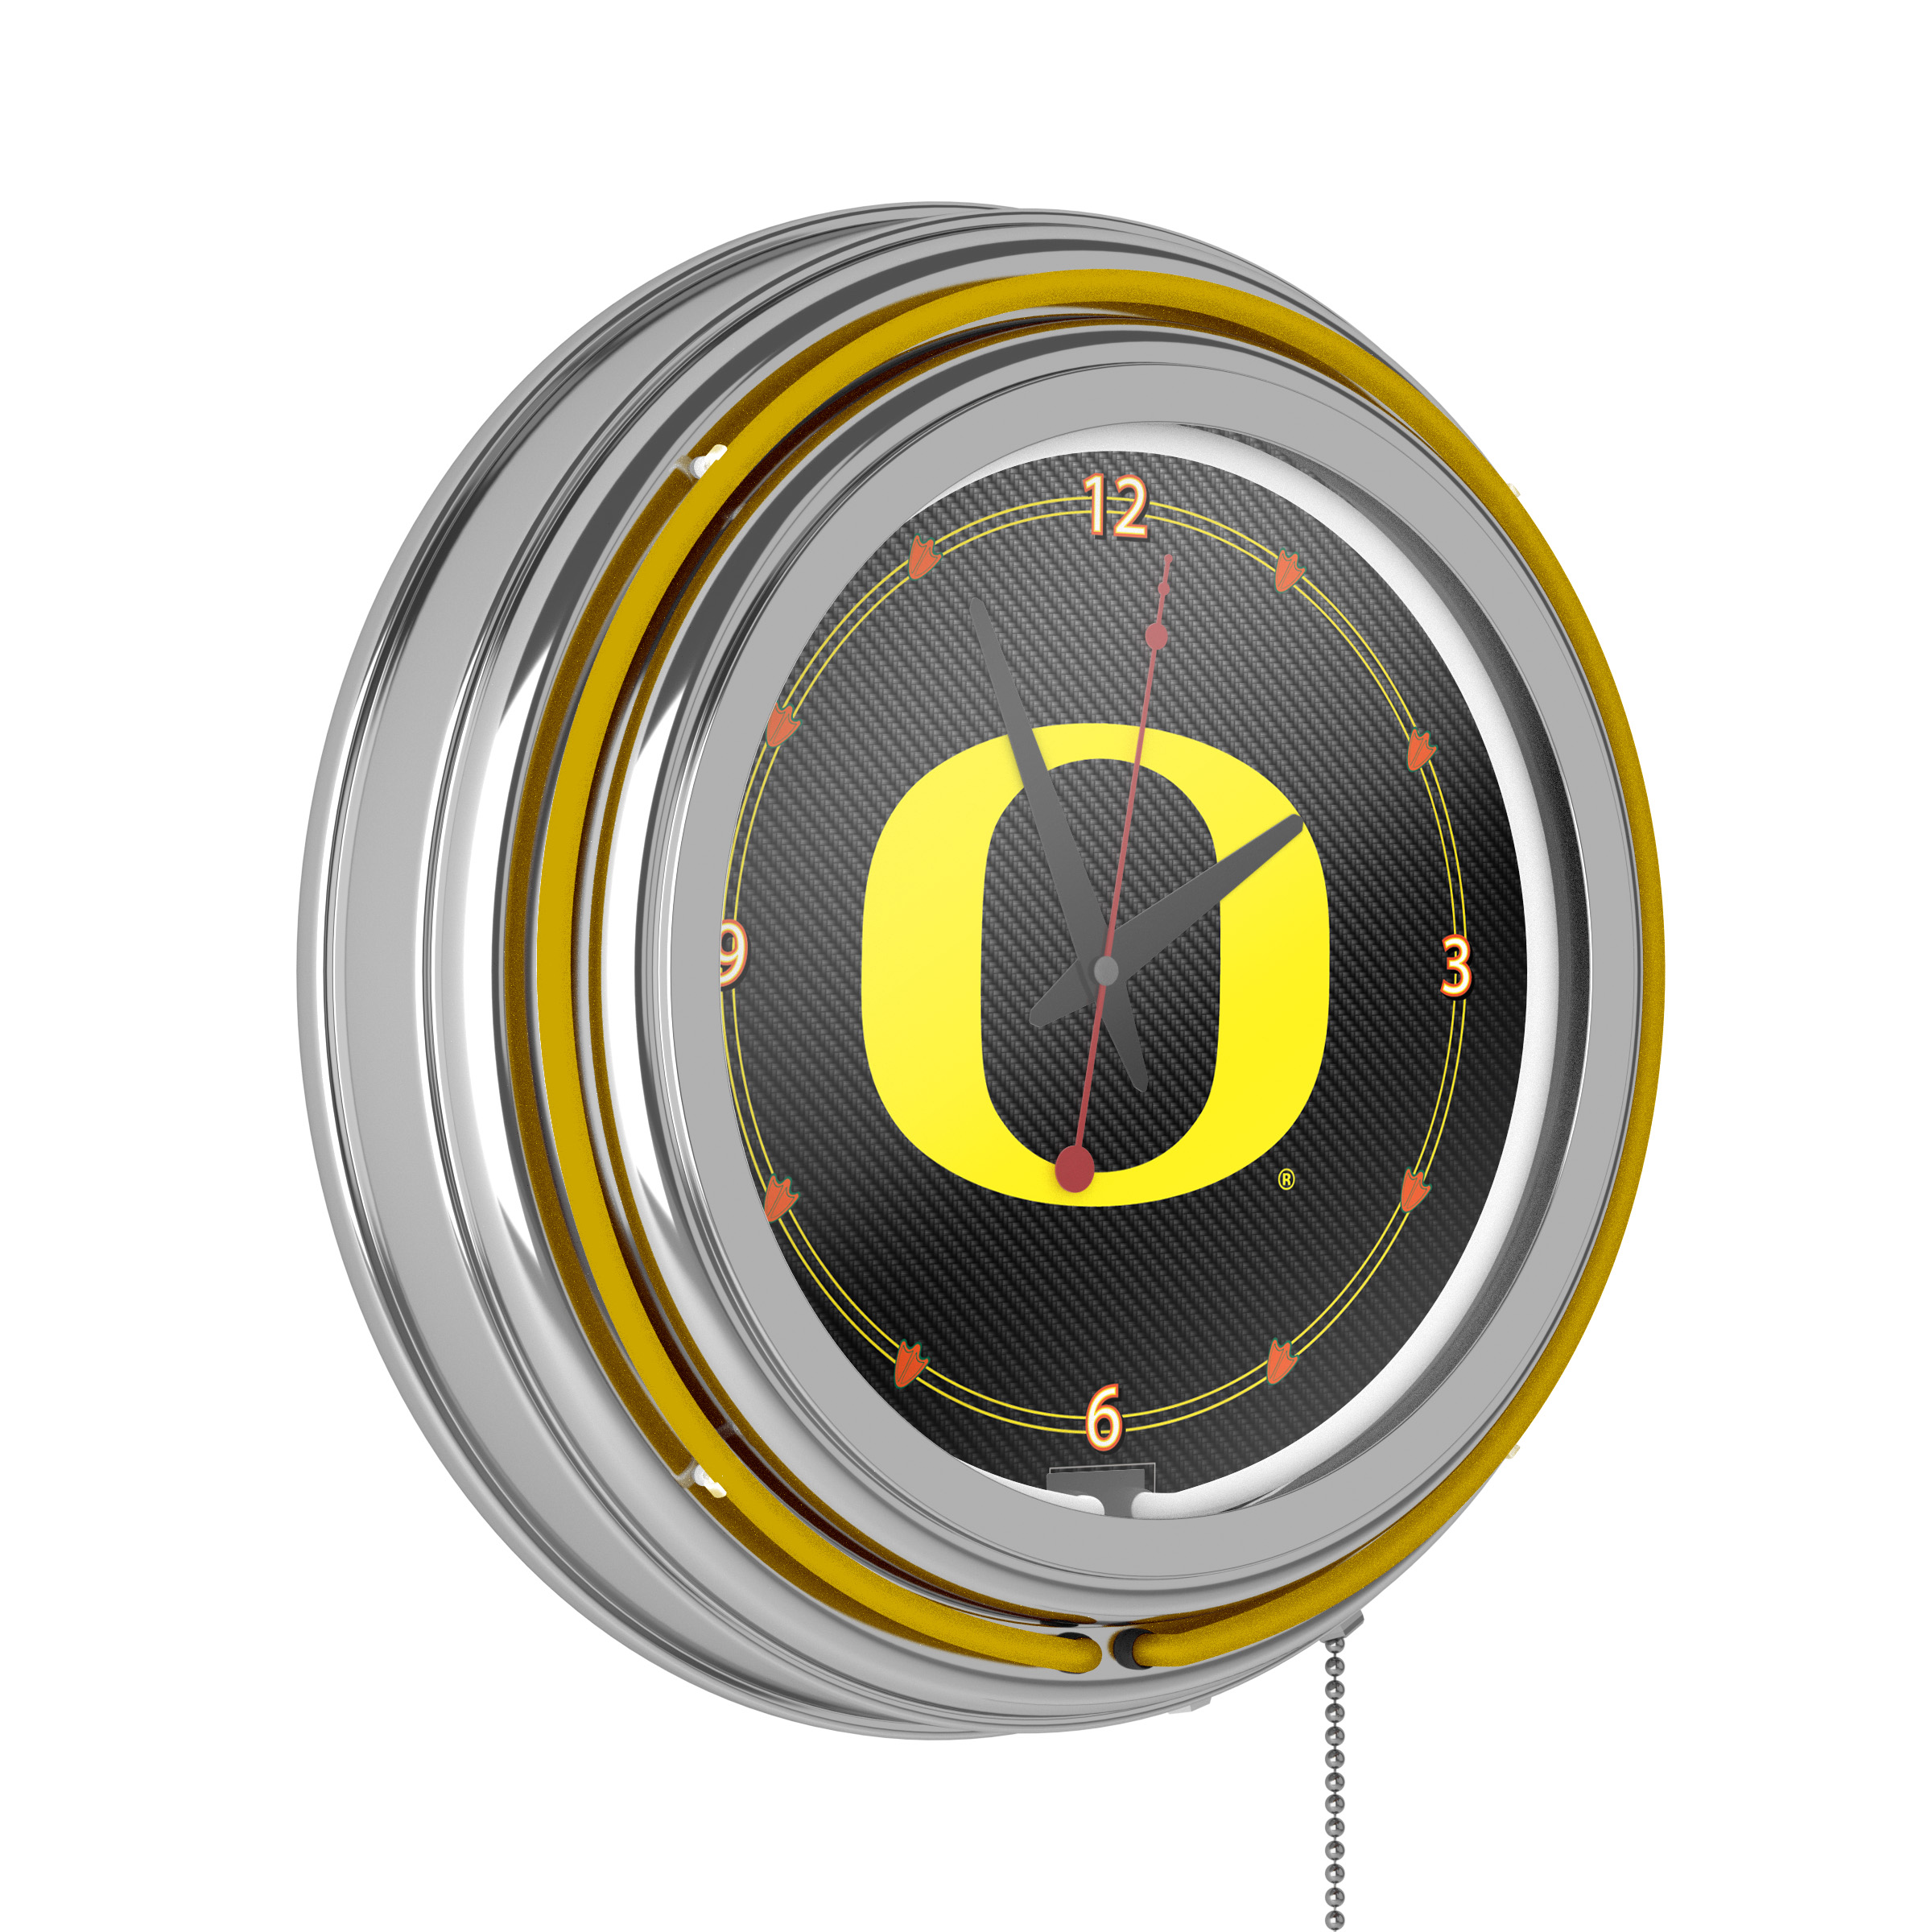 University of Oregon Chrome Double Rung Neon Clock - Carbon Fiber - image 1 of 6